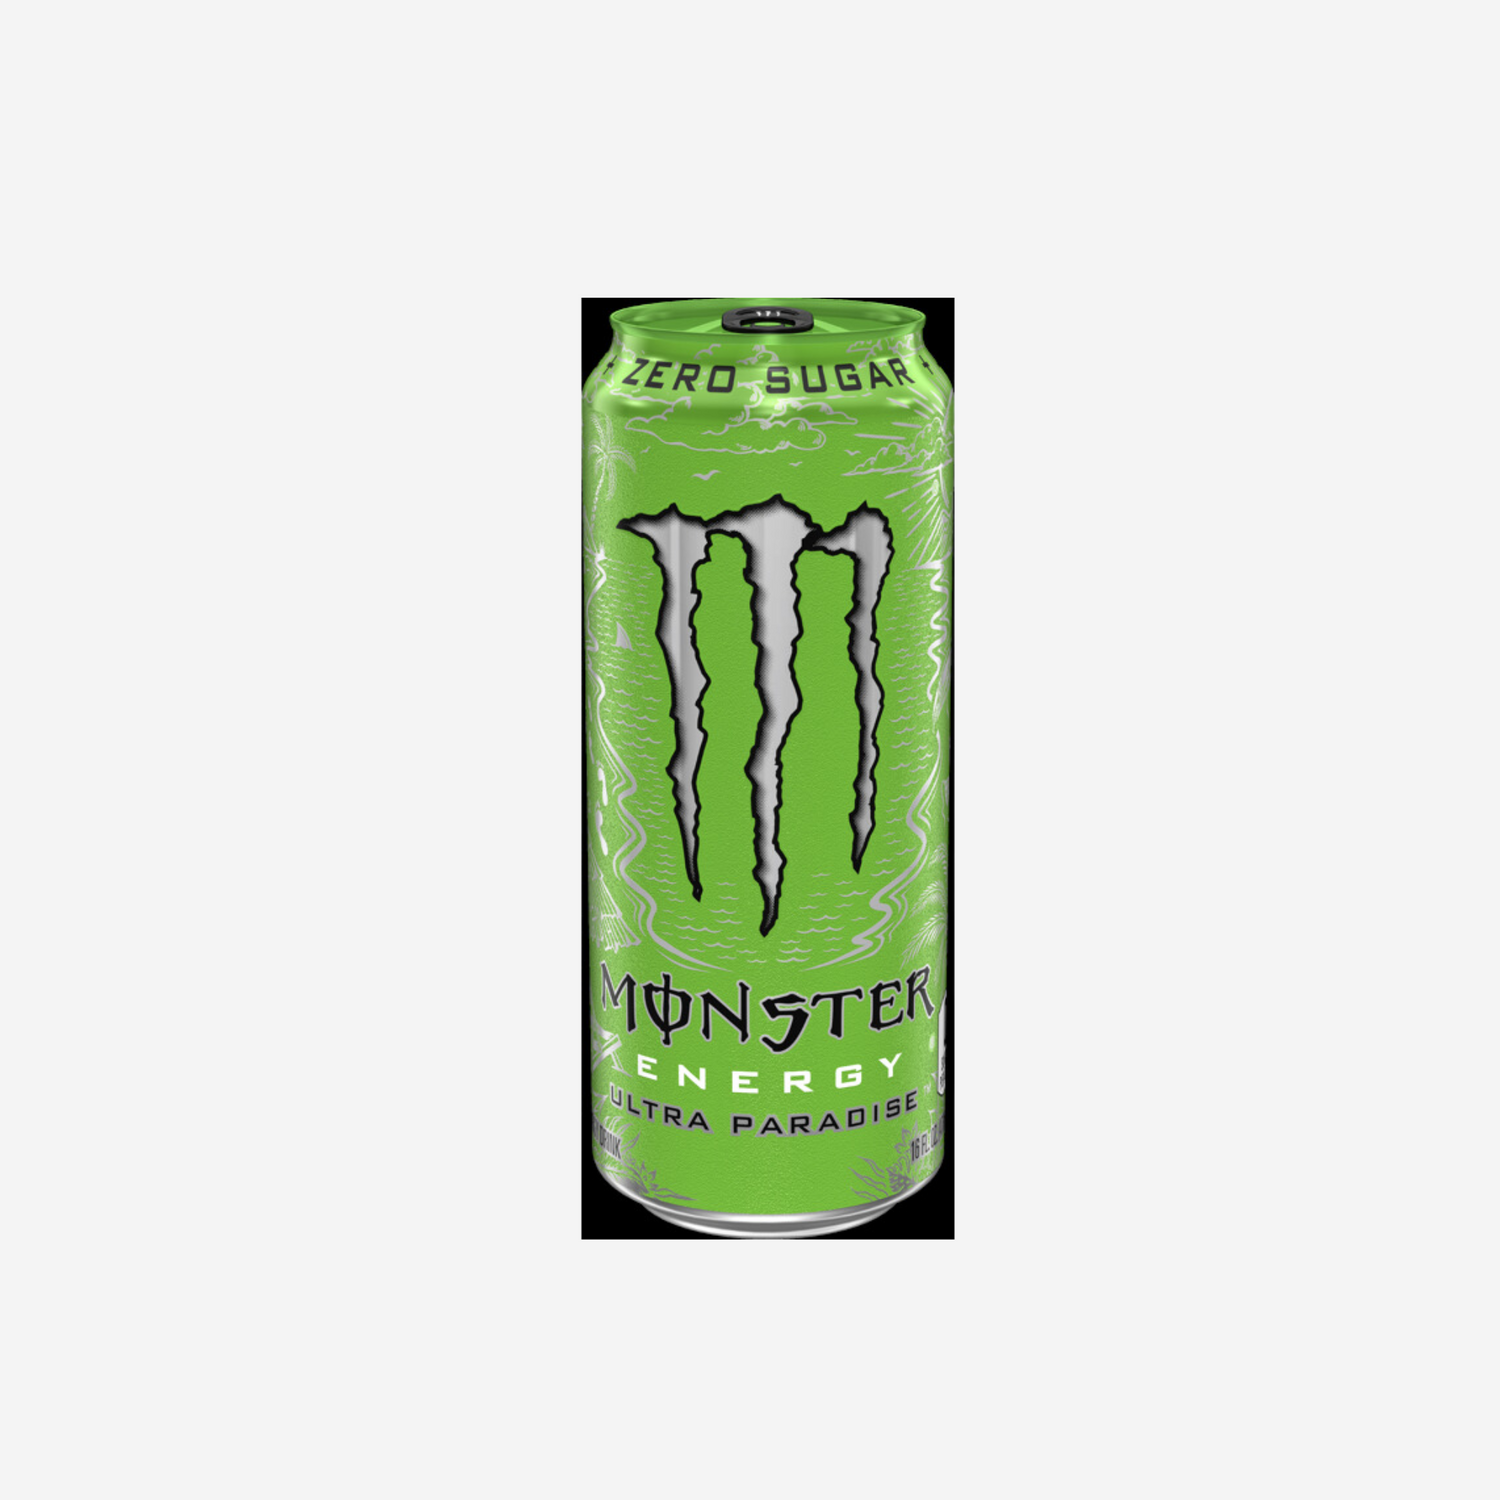 Monster Ultra Paradise, Sugar Free Energy Drink, 16 fl oz